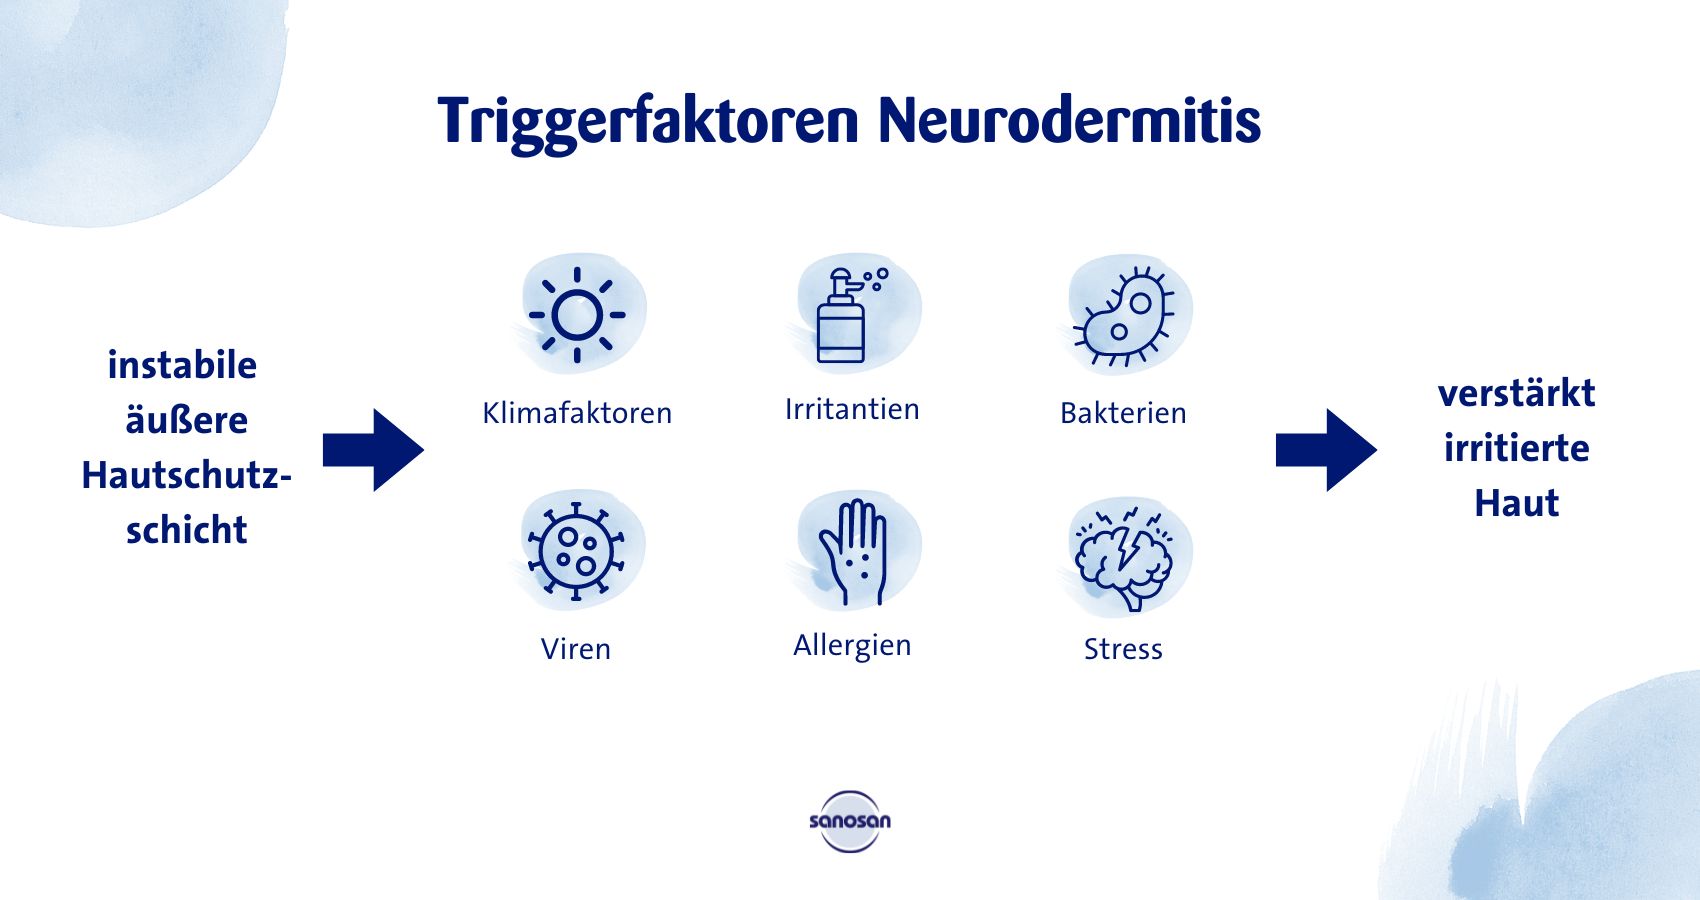 Neurodermitis Triggerfaktoren bei Säuglingen Infografik